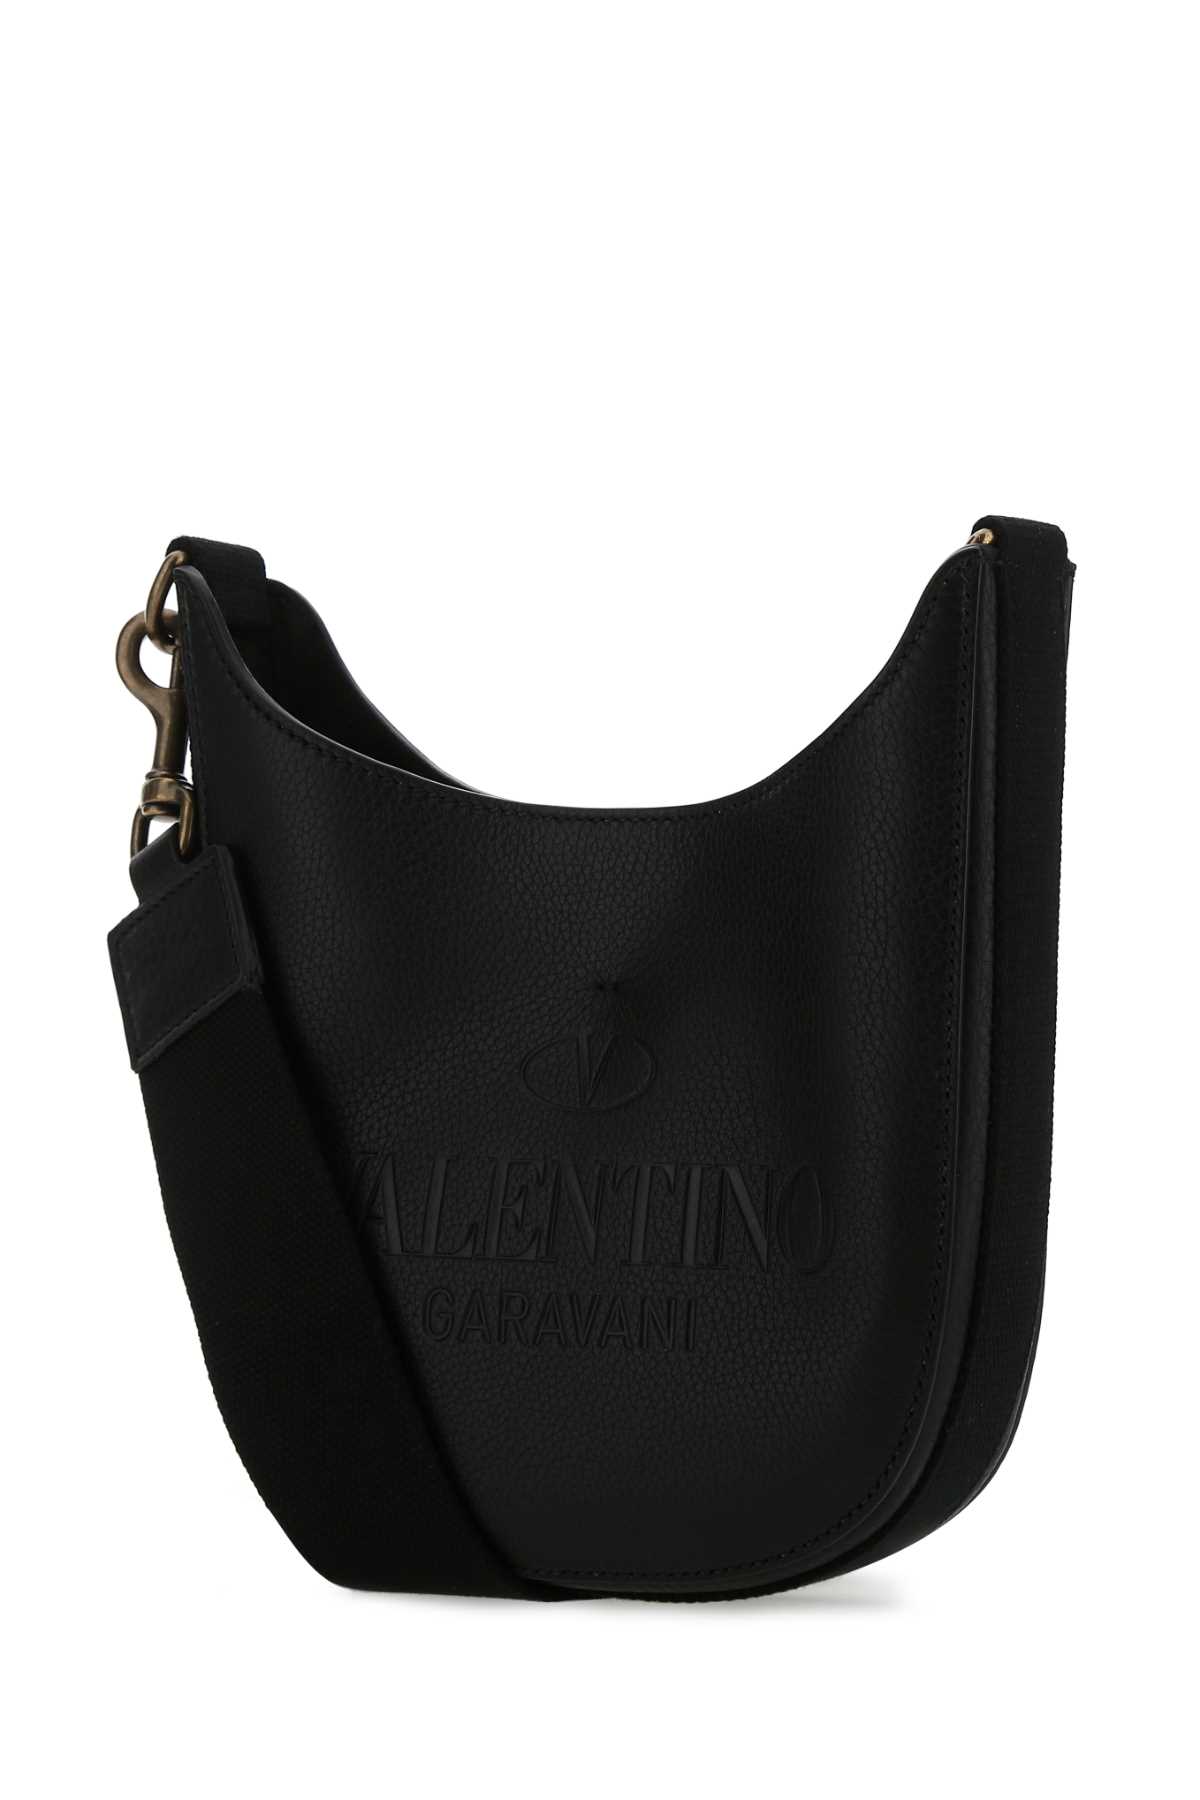 Valentino Garavani Black Leather Identity Crossbody Bag In Burgundy